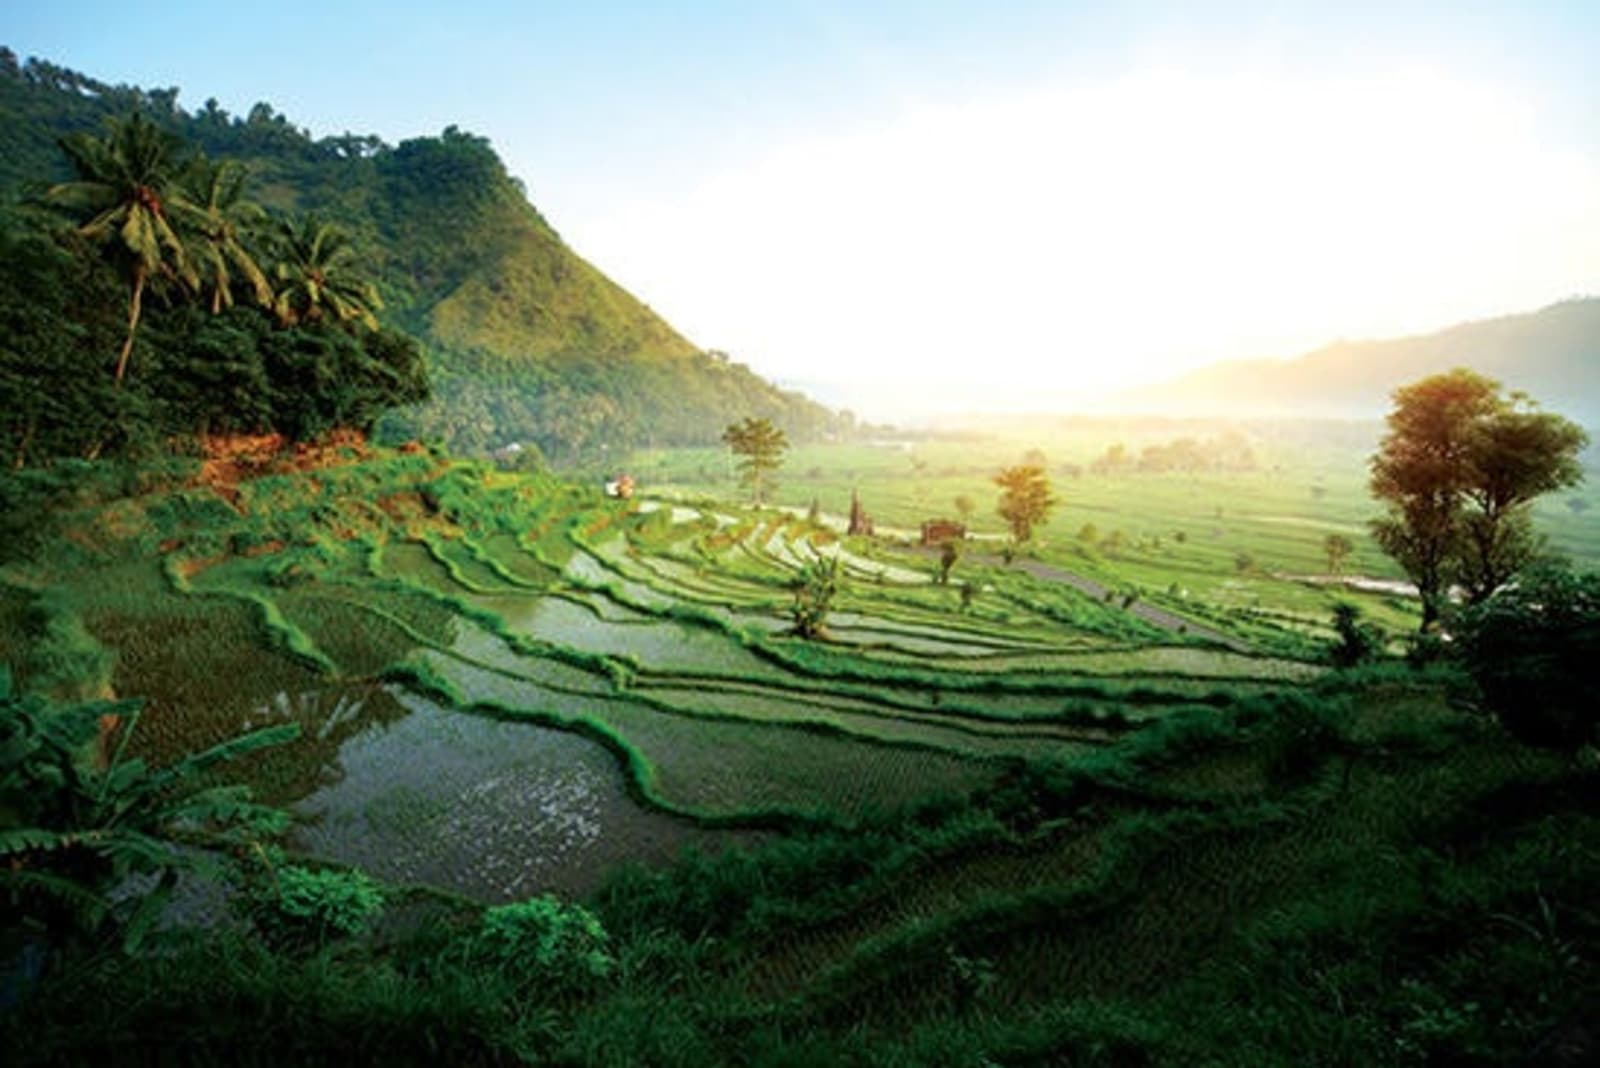 View of rice fields in Ubud, Bali.